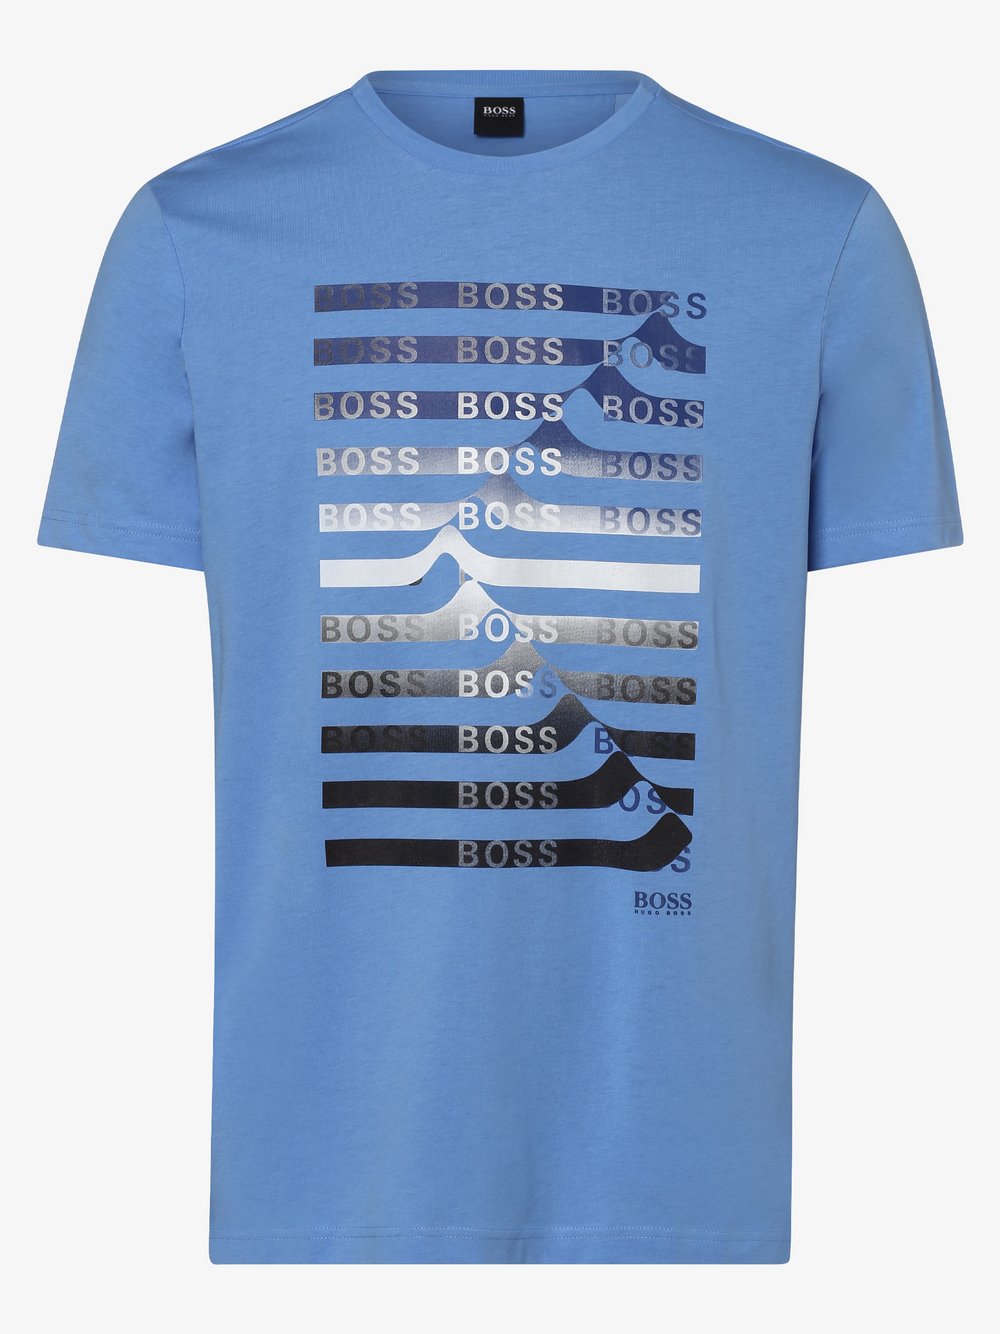 BOSS Athleisure - T-shirt męski – Teeonic, niebieski